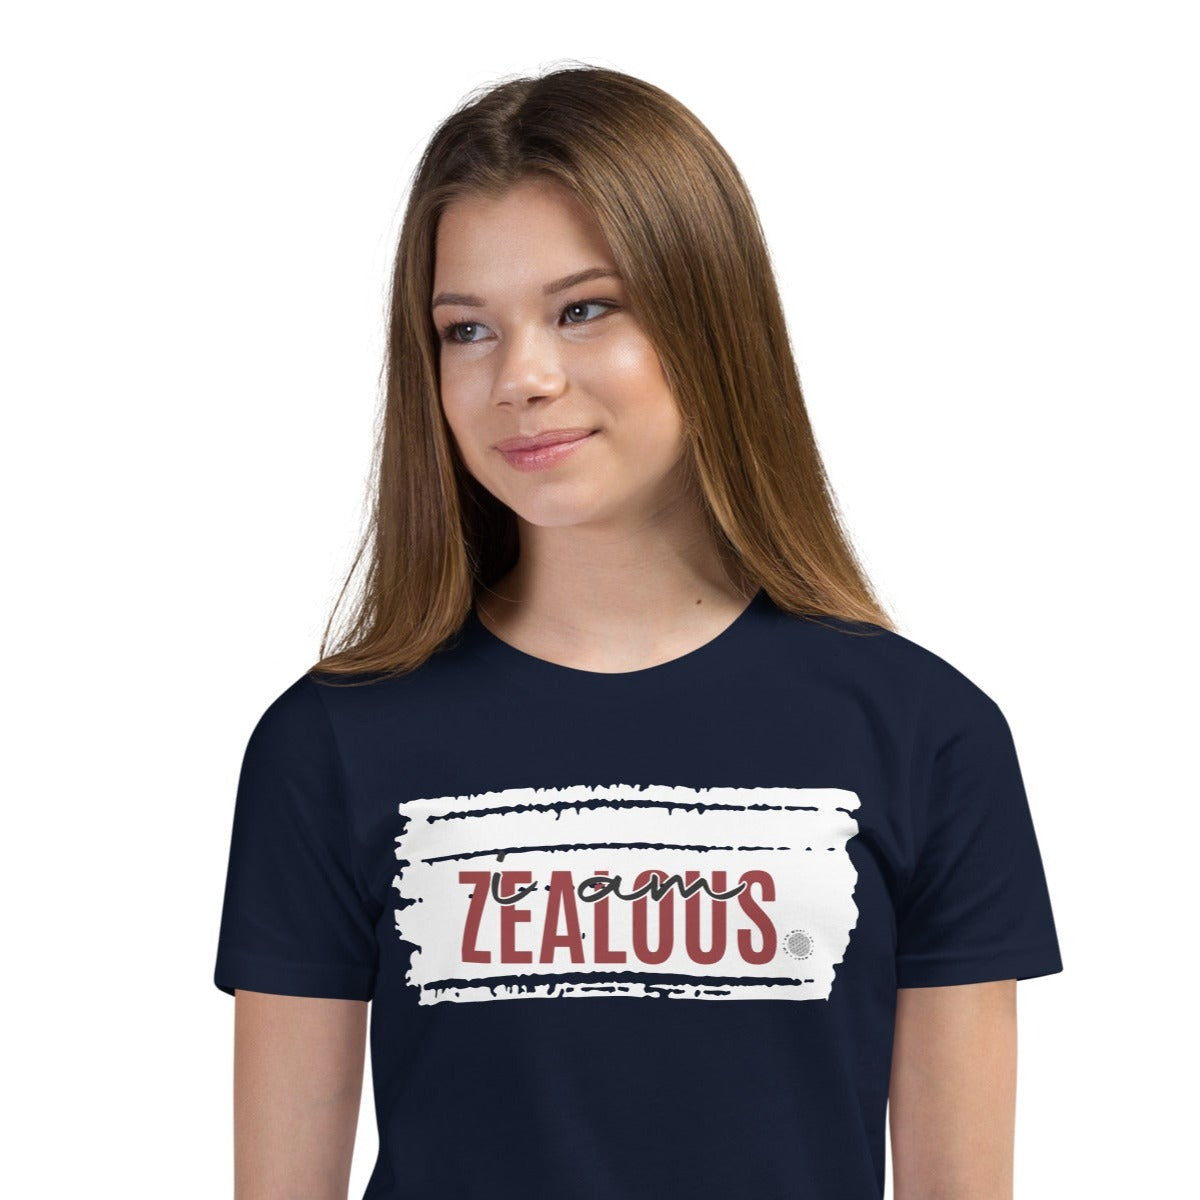 I Am Zealous Youth T-Shirt navy